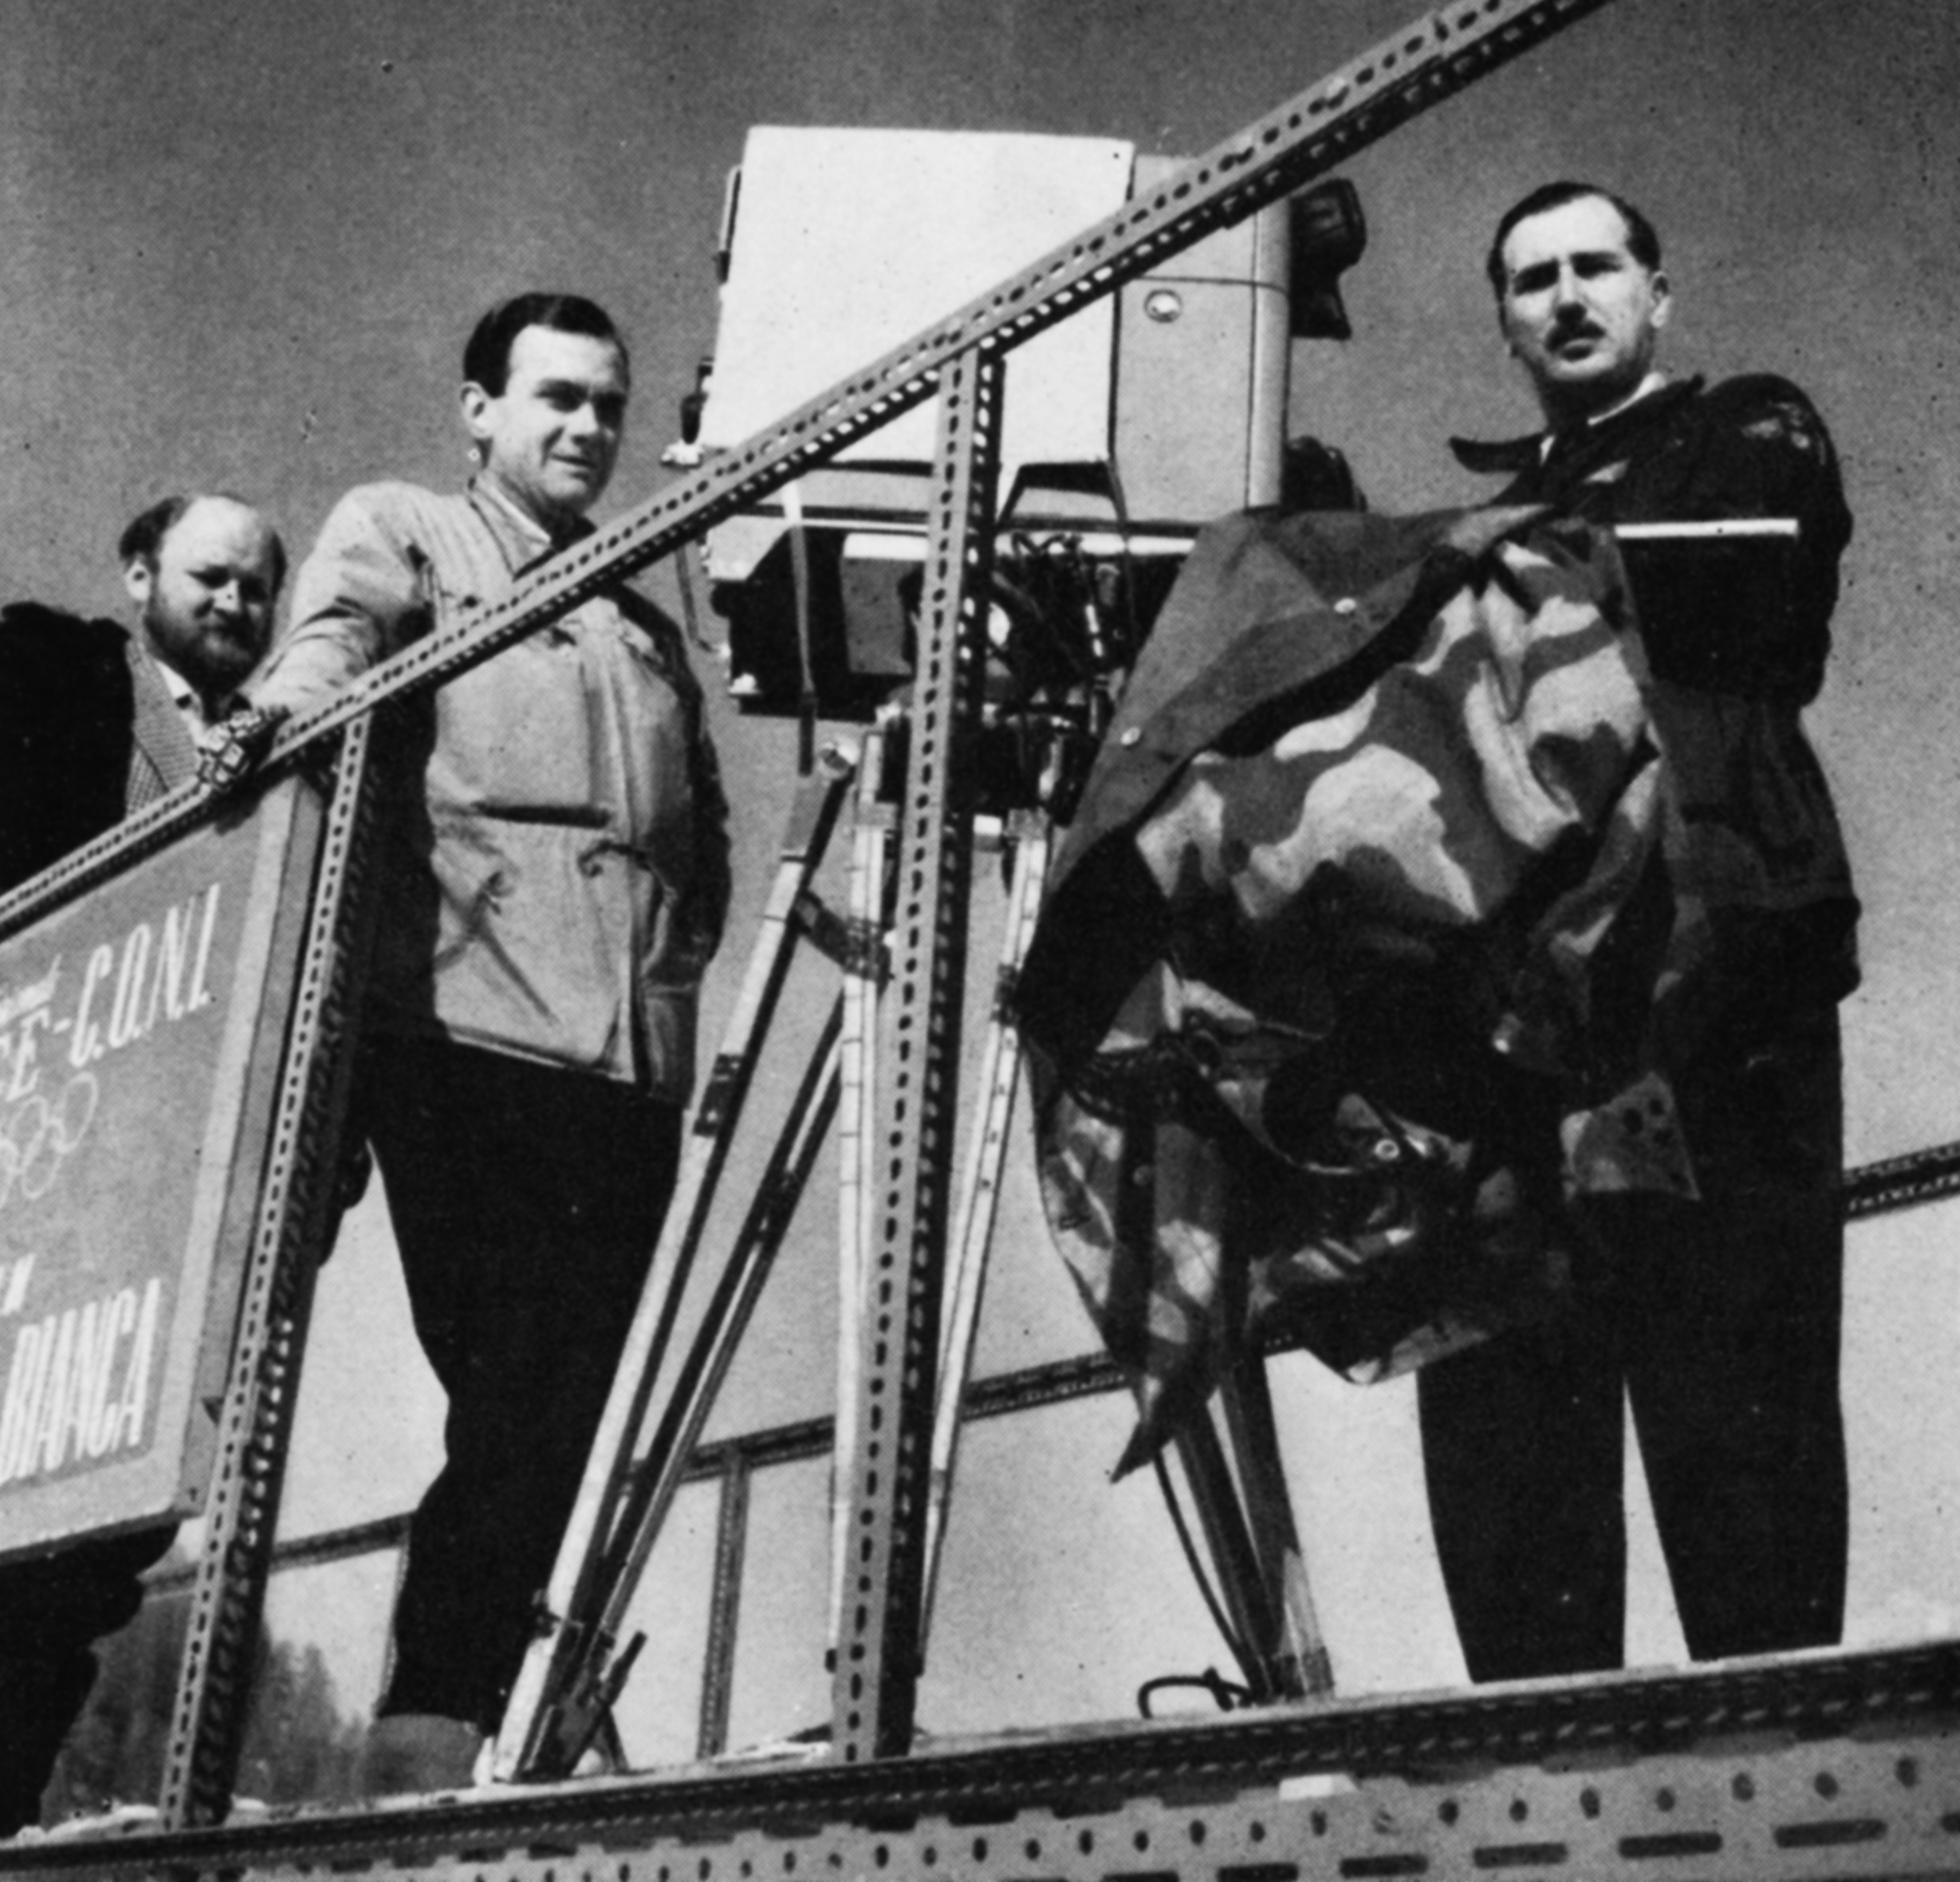 Three men stand beside a camera on an outdoor gantry